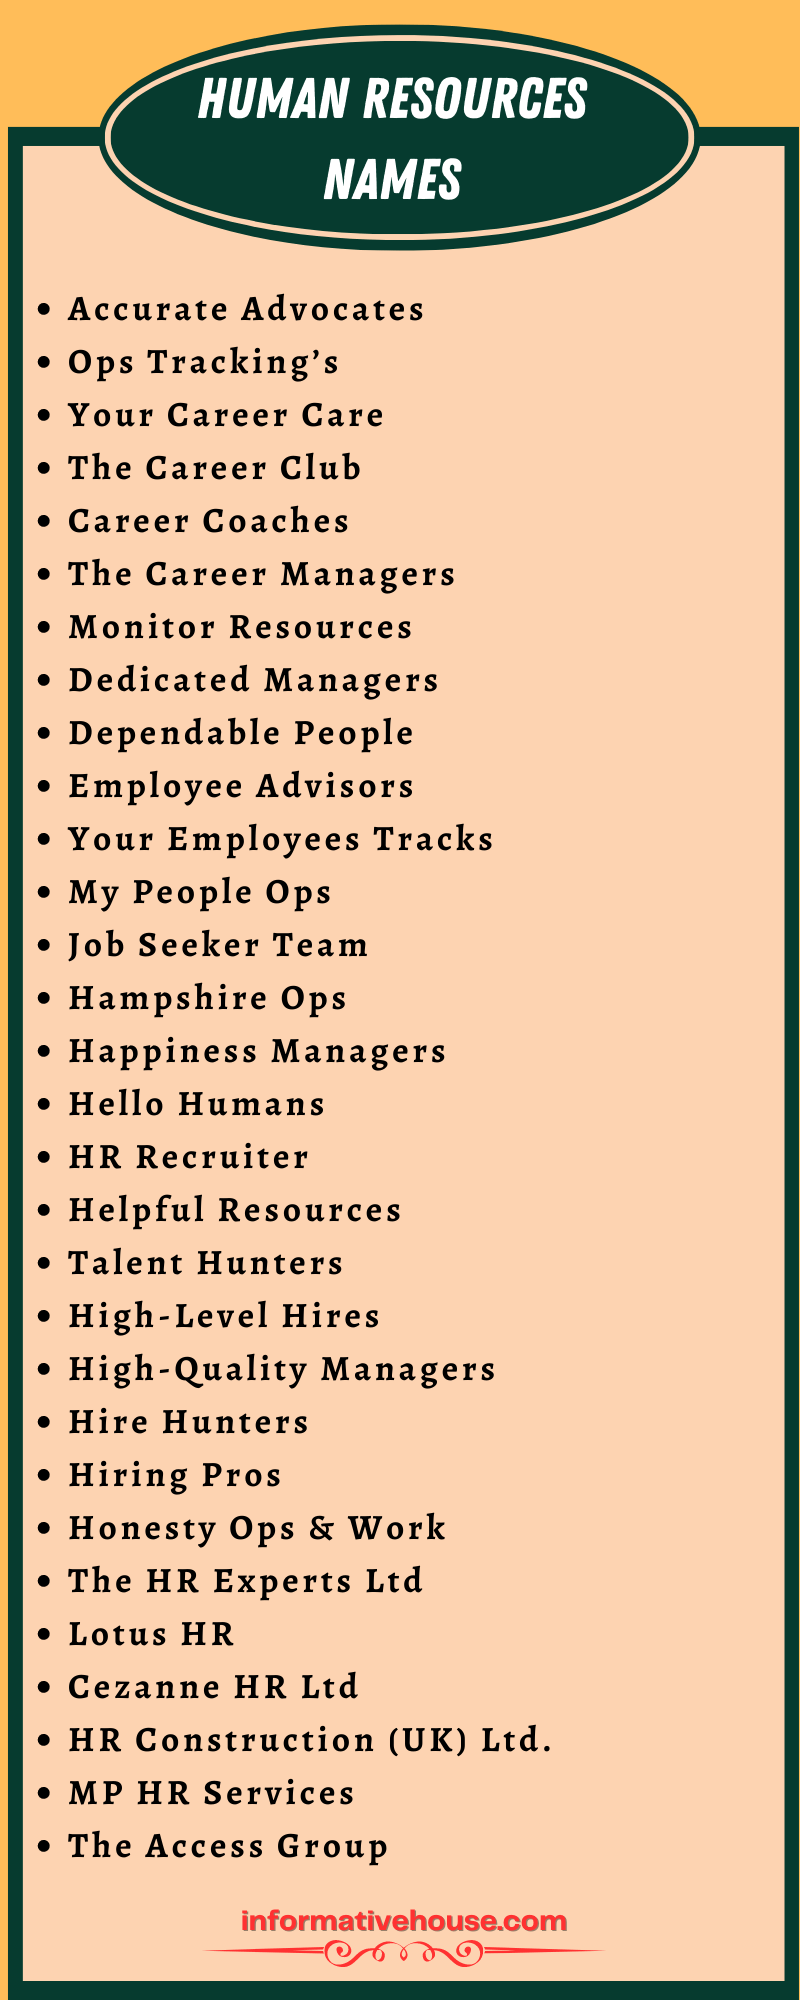 Human Resources Names